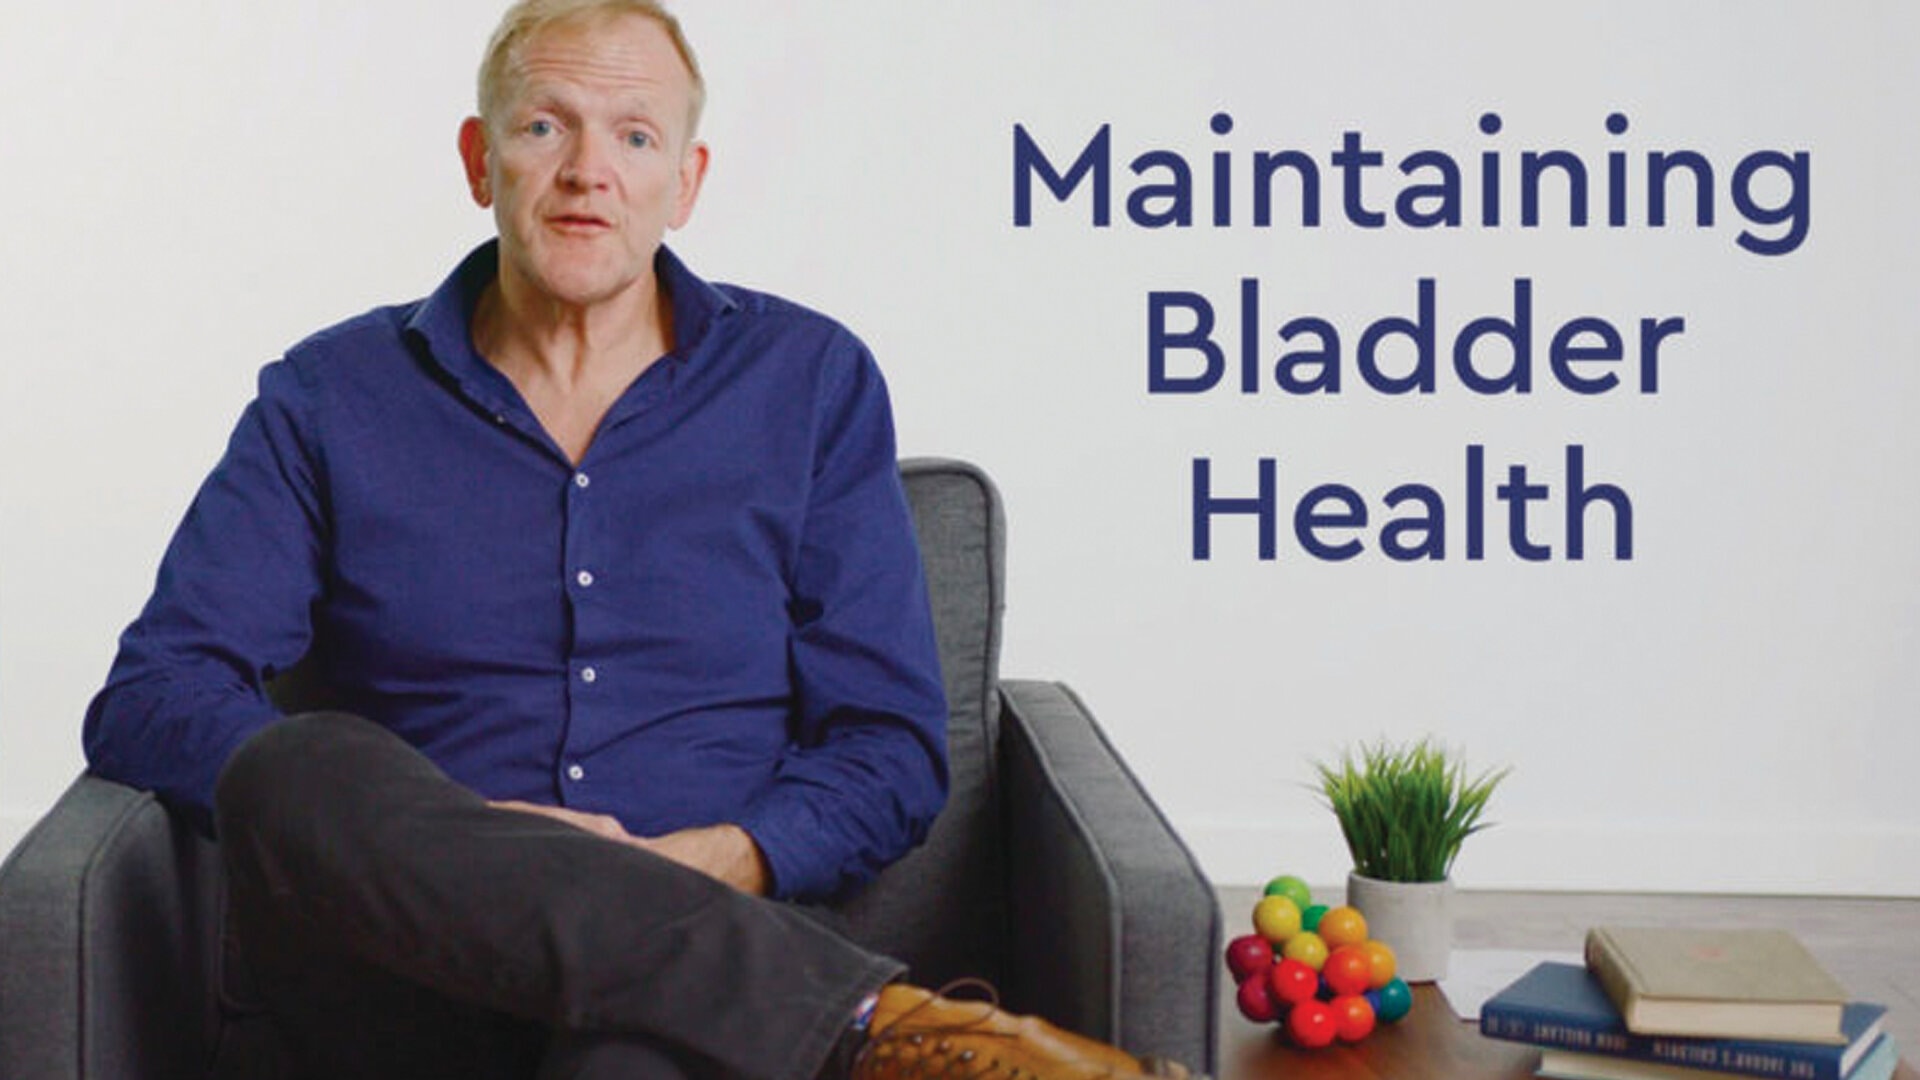 An elderly man giving tips on Maintaining Bladder Health